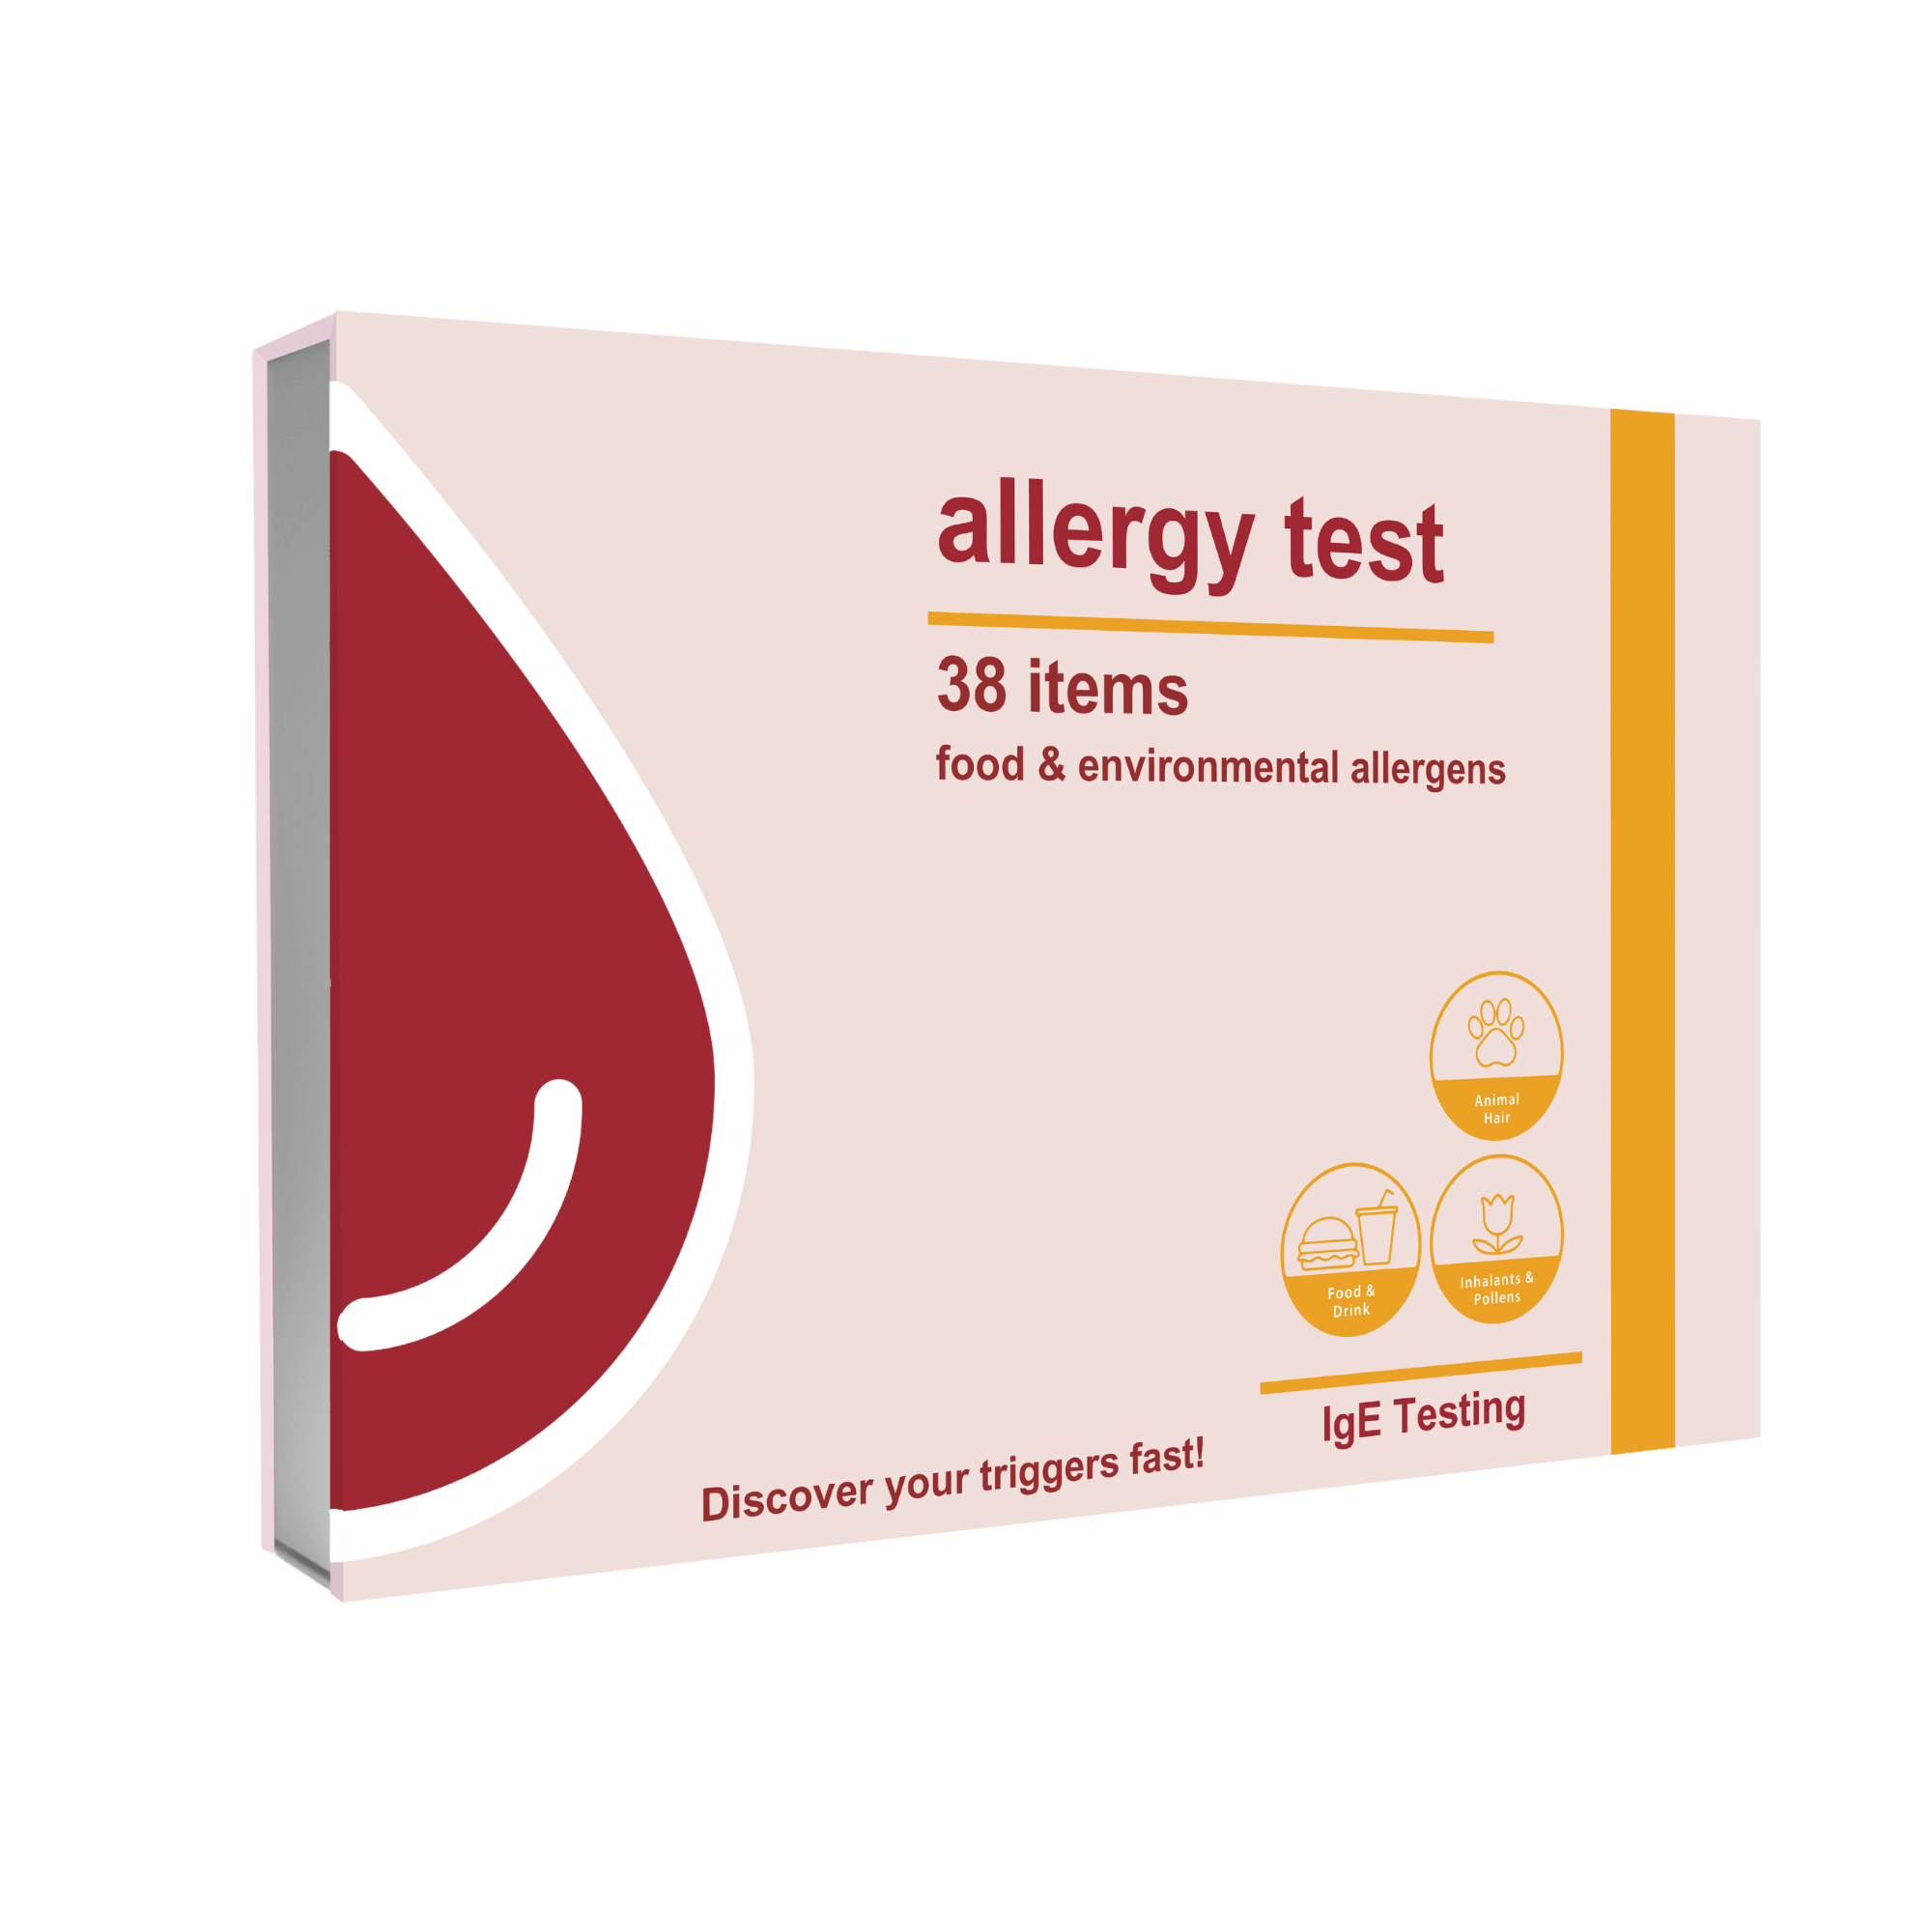 allergy test - Wheat Intolerance